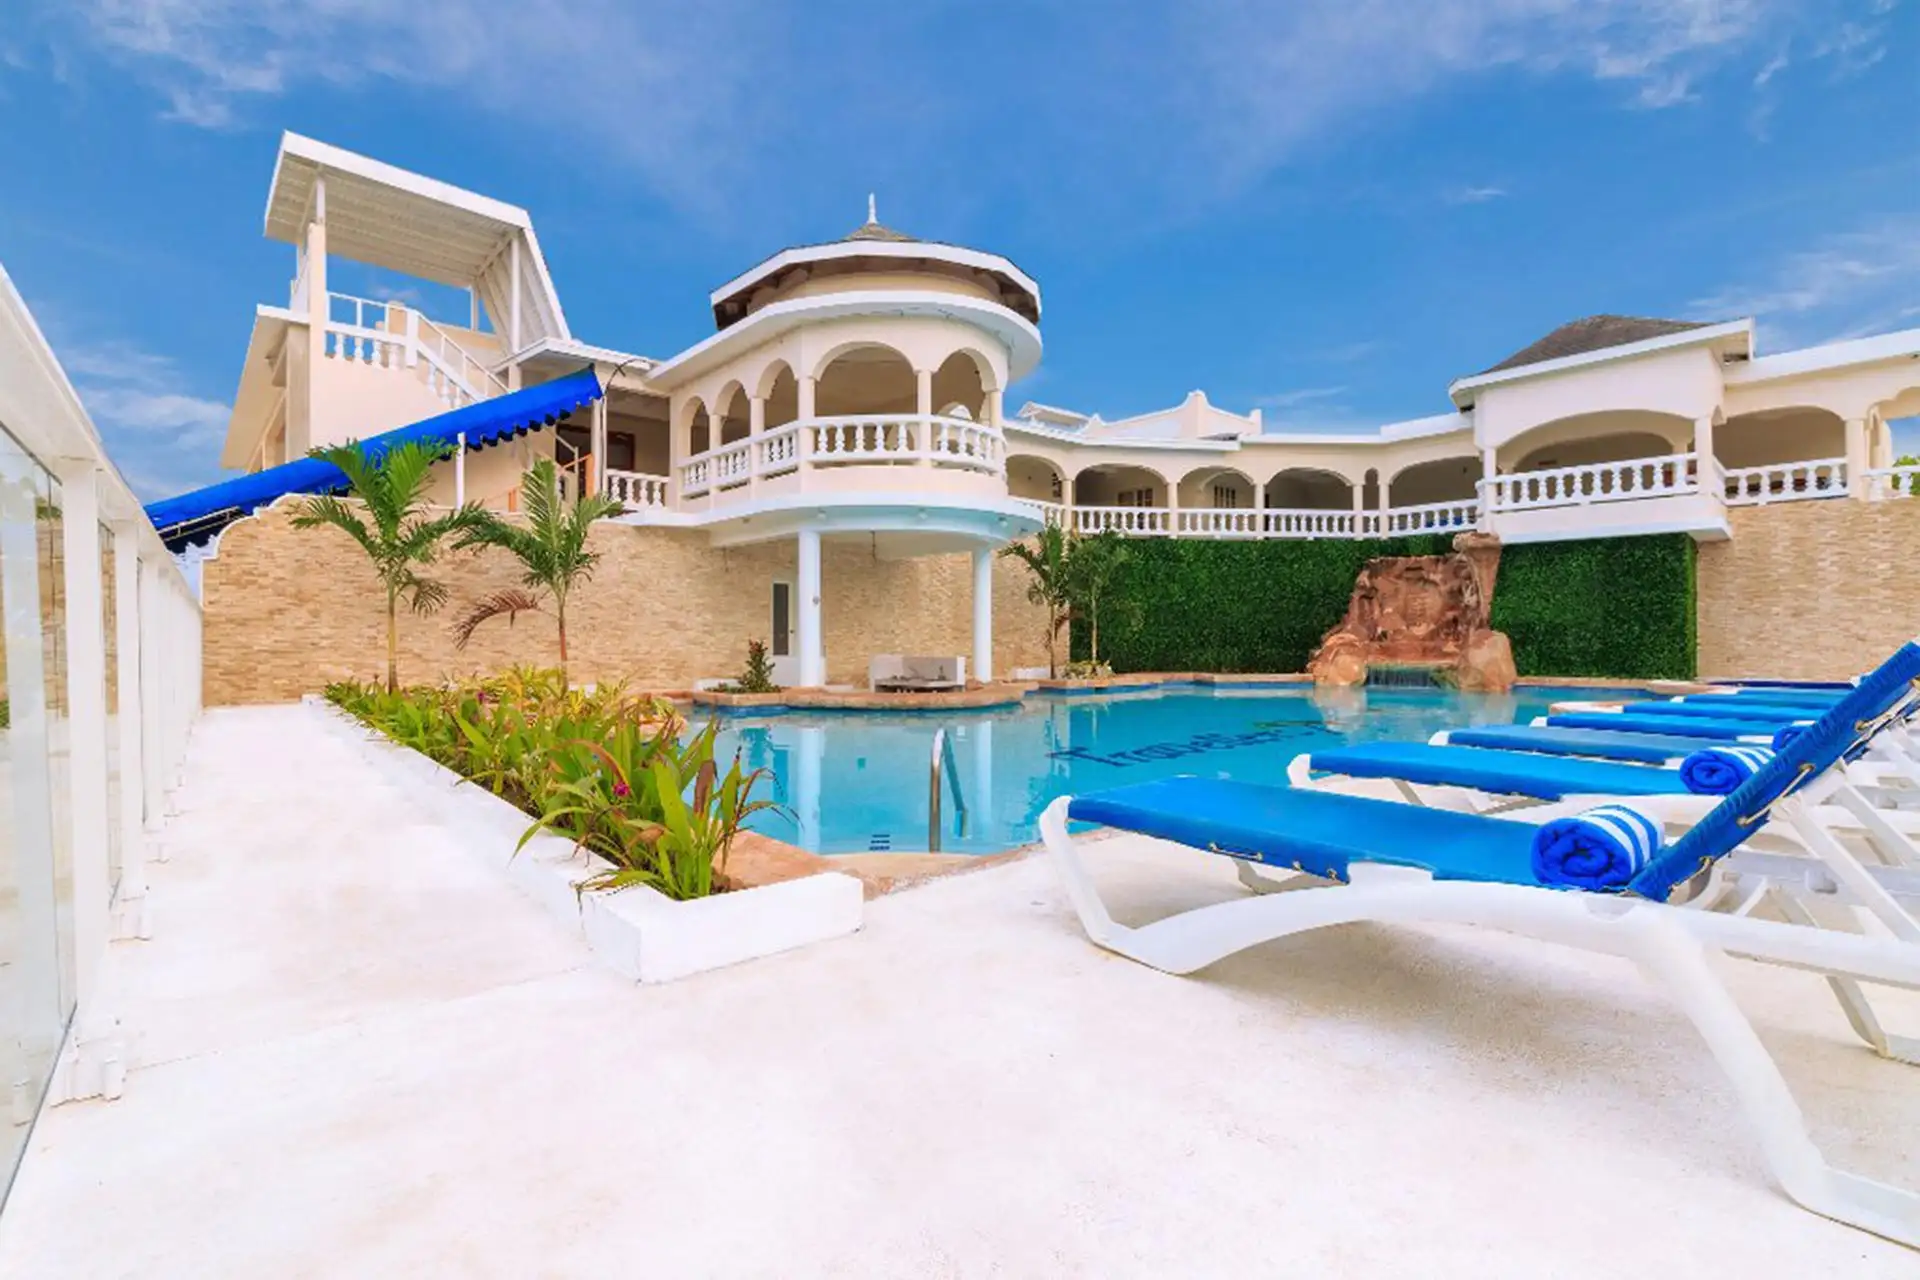 Travellers Beach Resort in Negril, Jamaica; Courtesy of Travellers Beach Resort